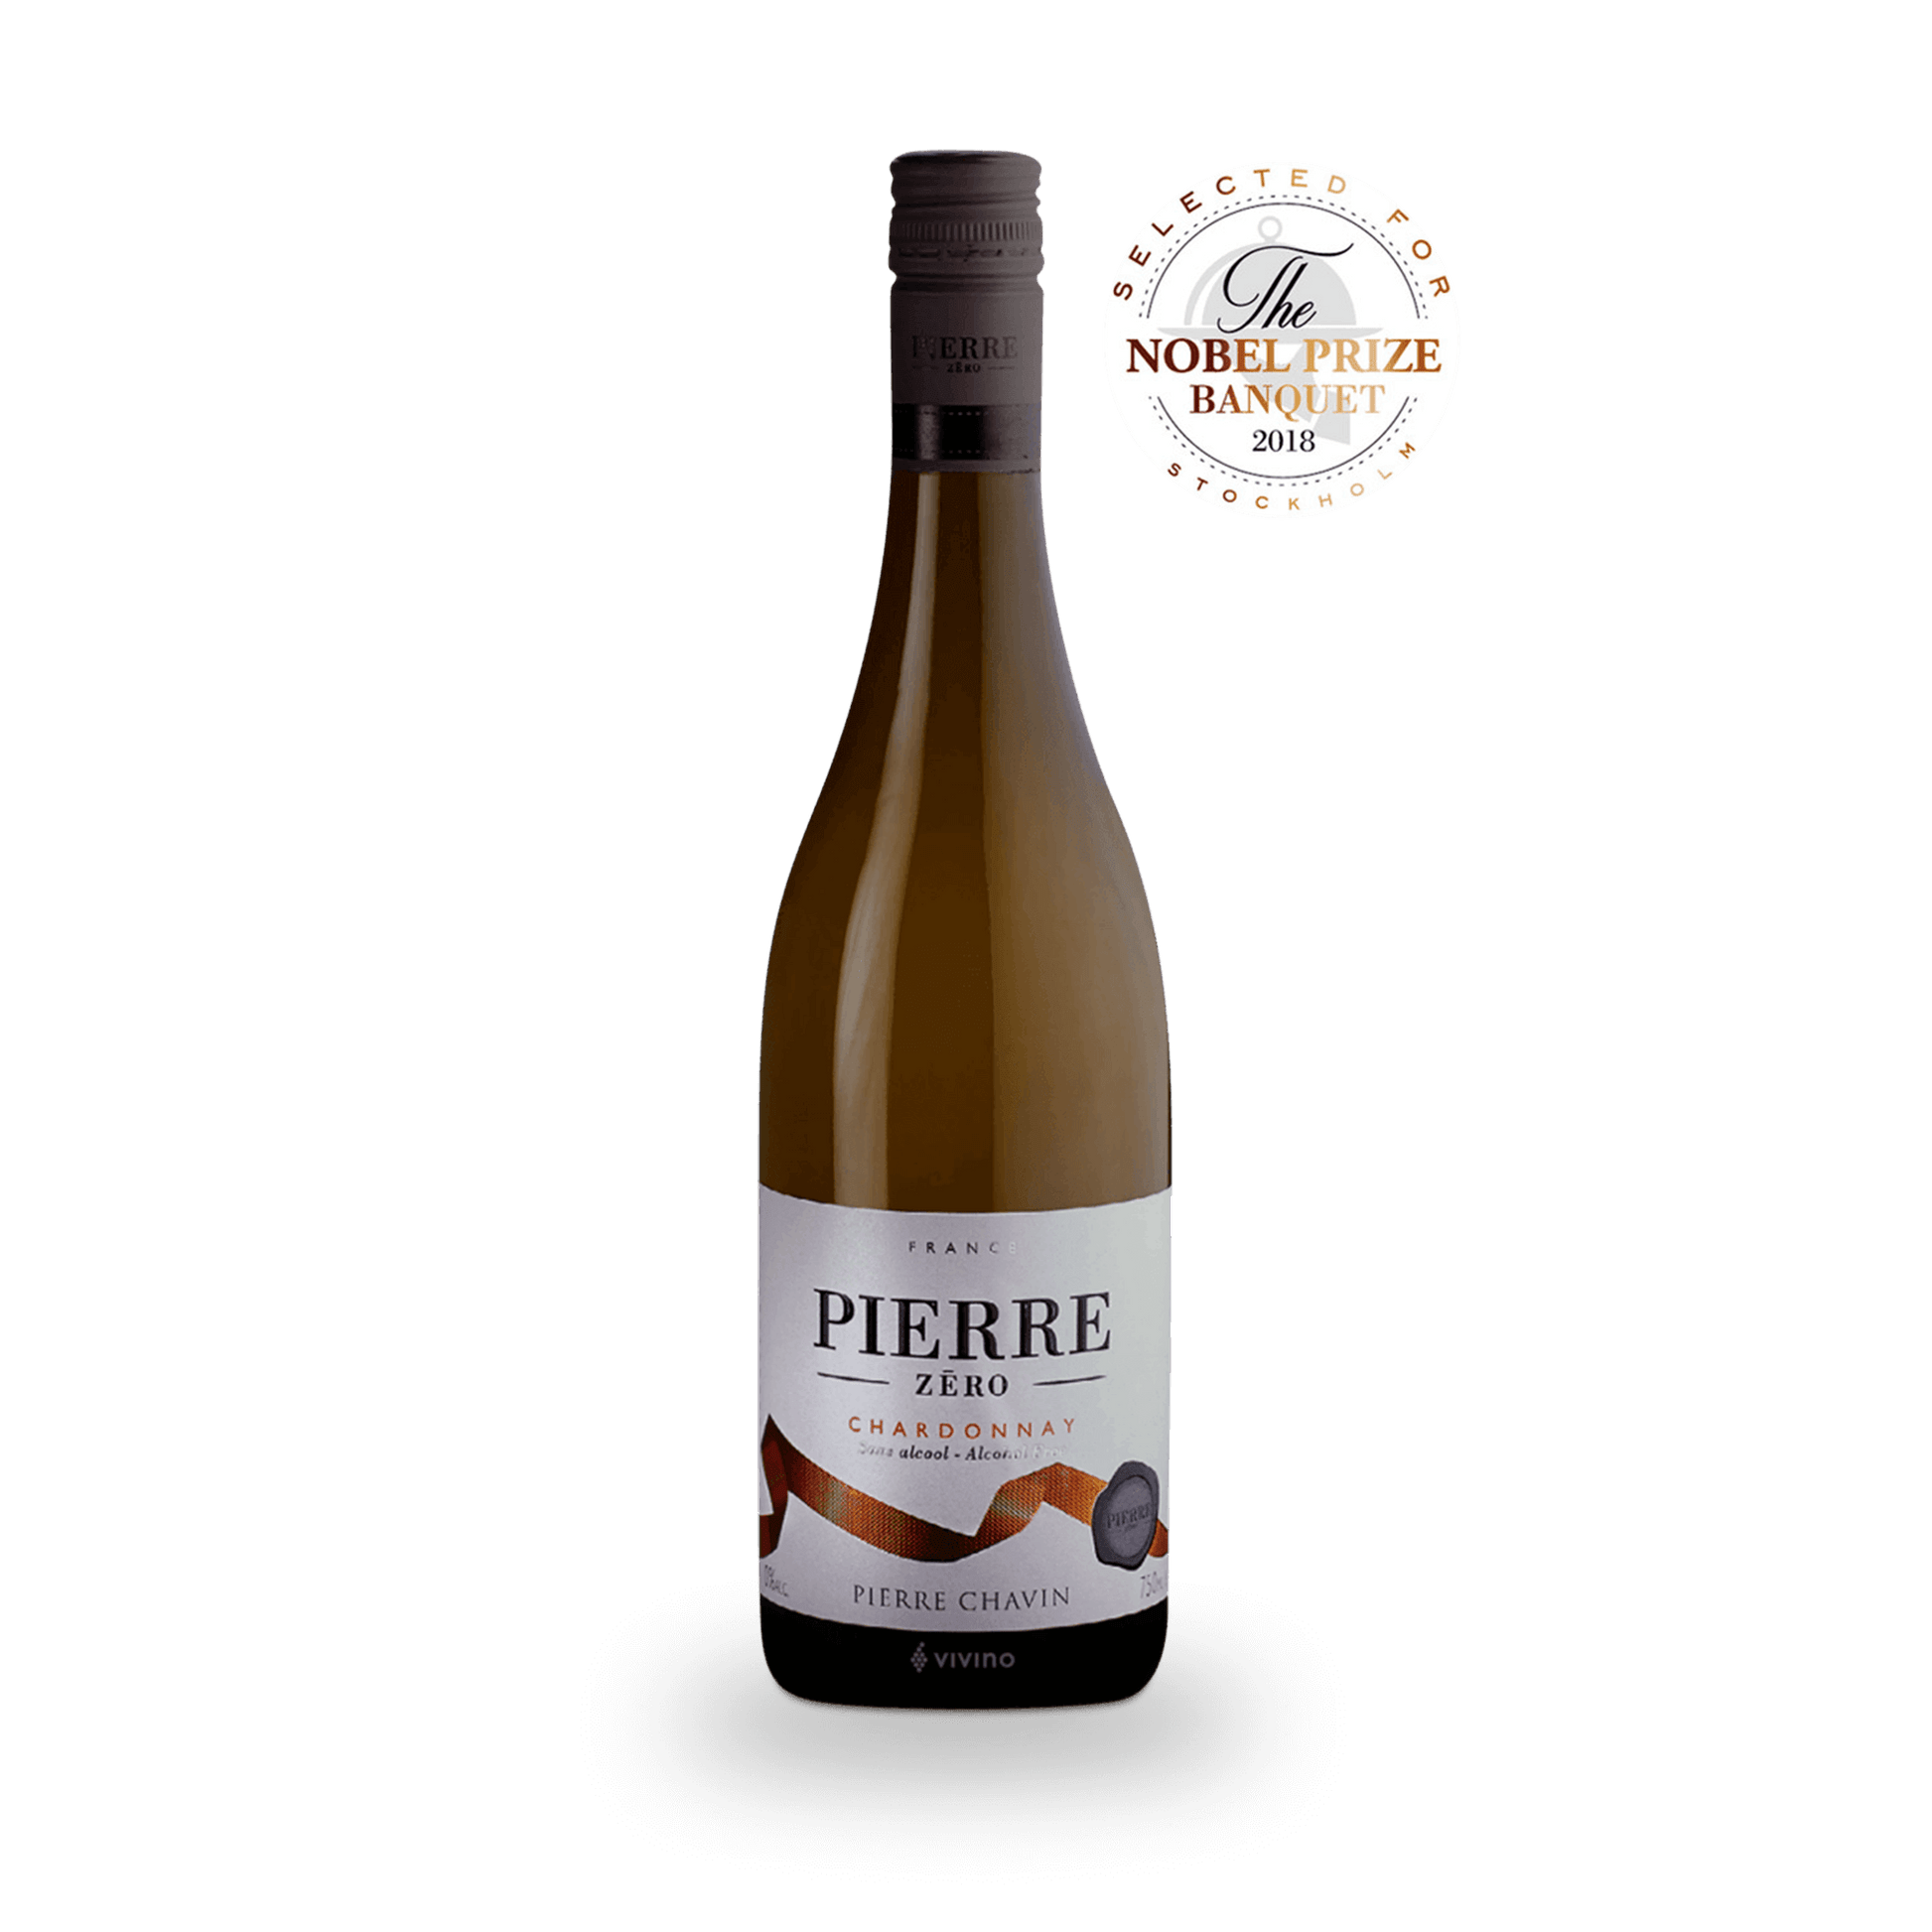 Pierre Zéro Chardonnay Non-Alcoholic White Wine Bottle Award